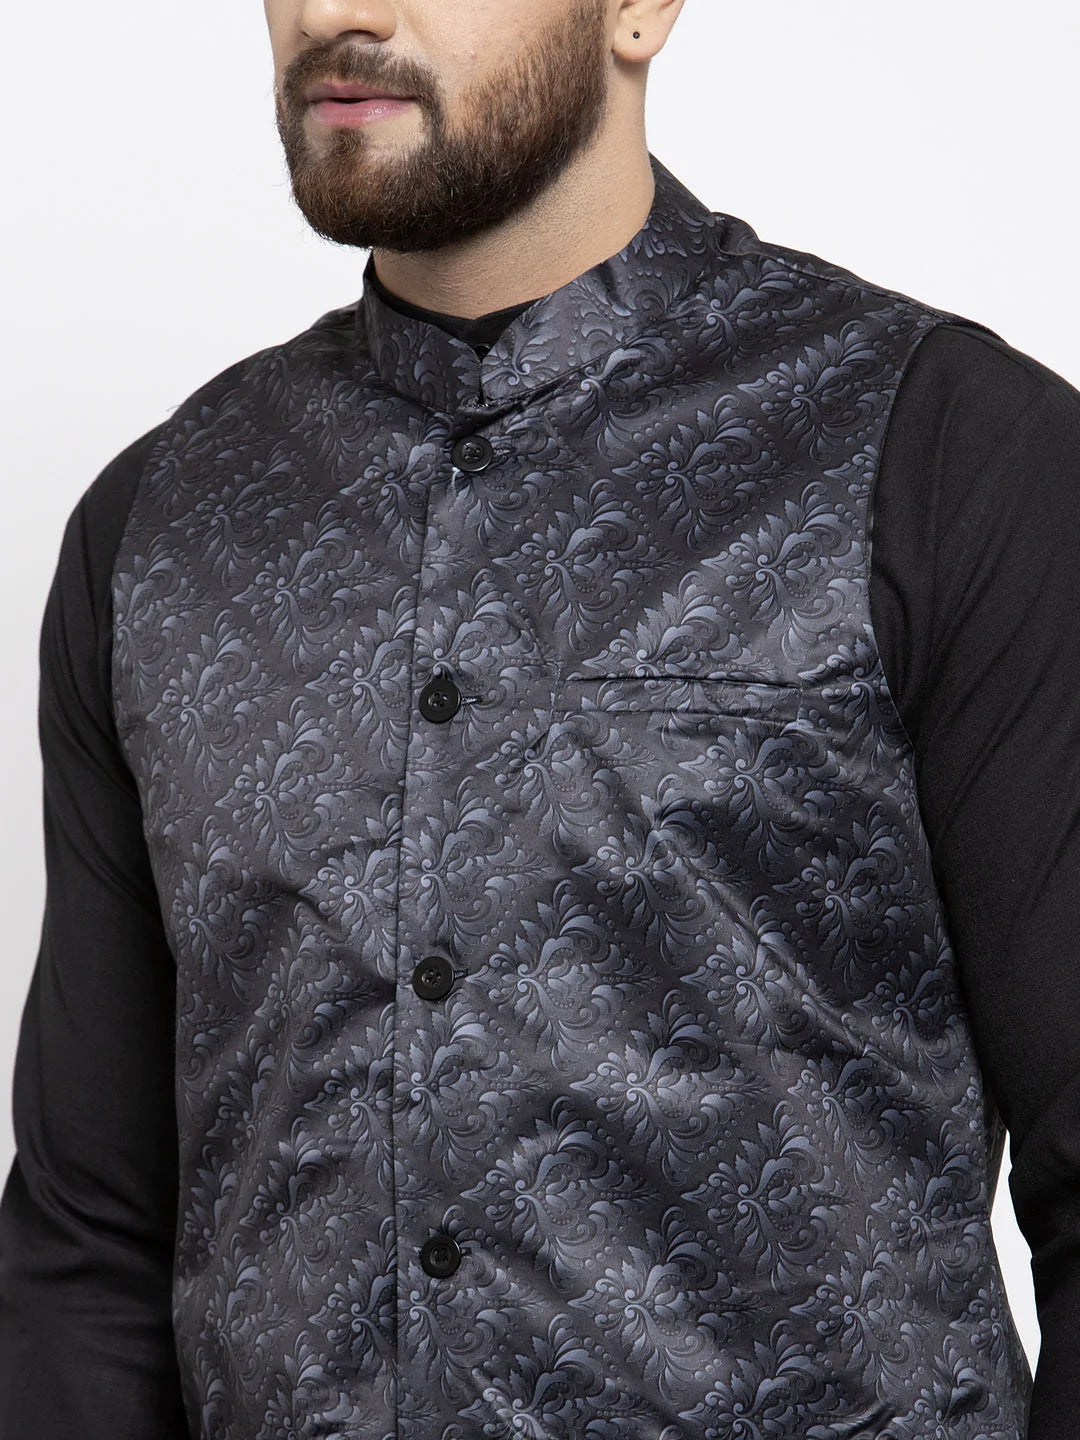 Jompers Men's Solid Cotton Kurta Pajama with Printed Waistcoat ( JOKP WC 4059 Charcoal-B )